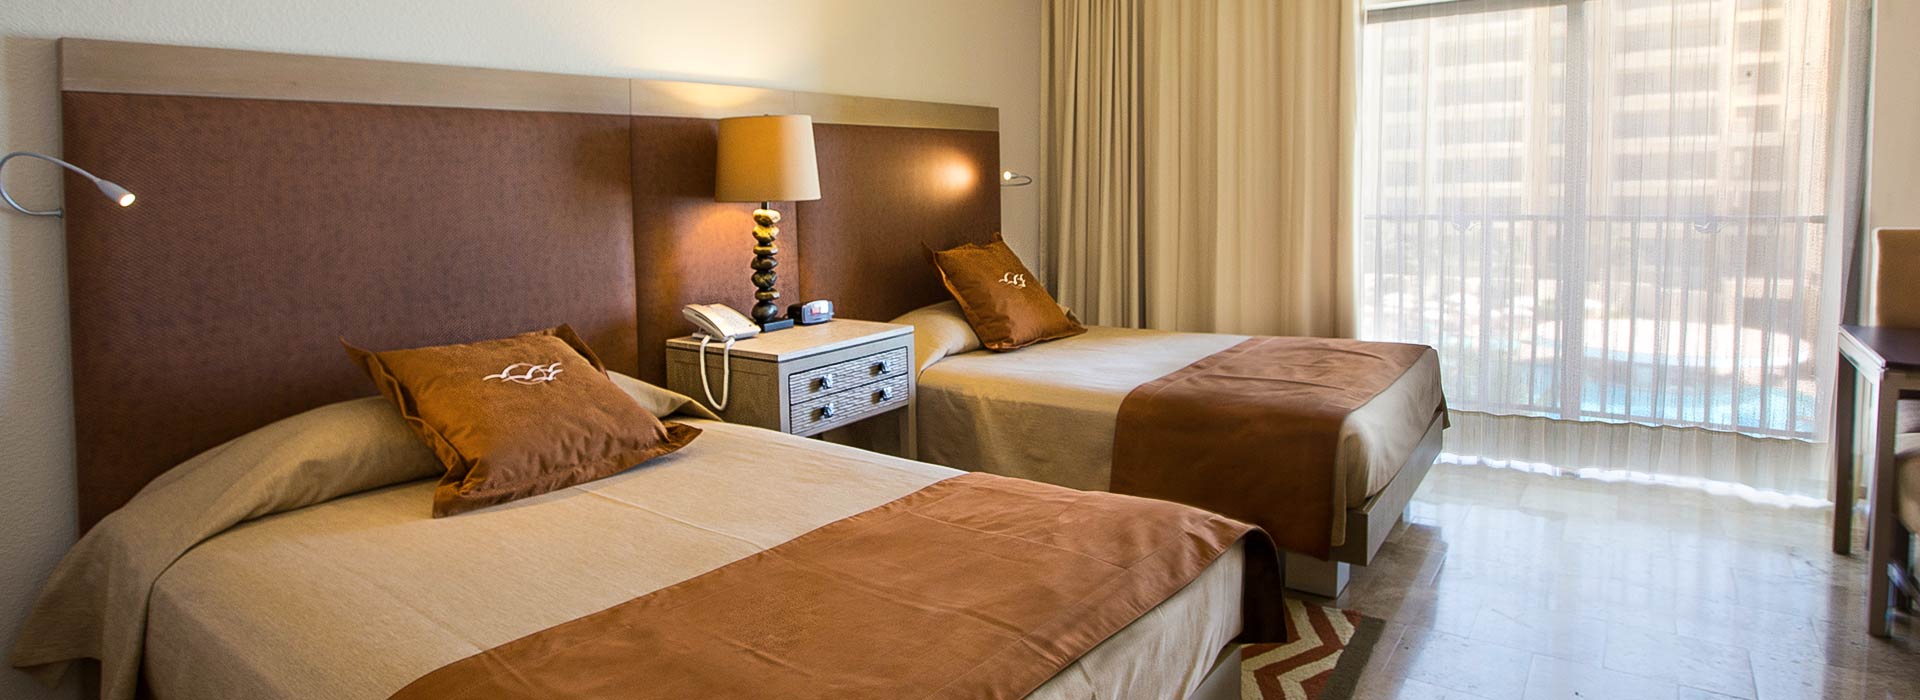 Ocean View Junior suite with double beds in Cancun beachfront resort
